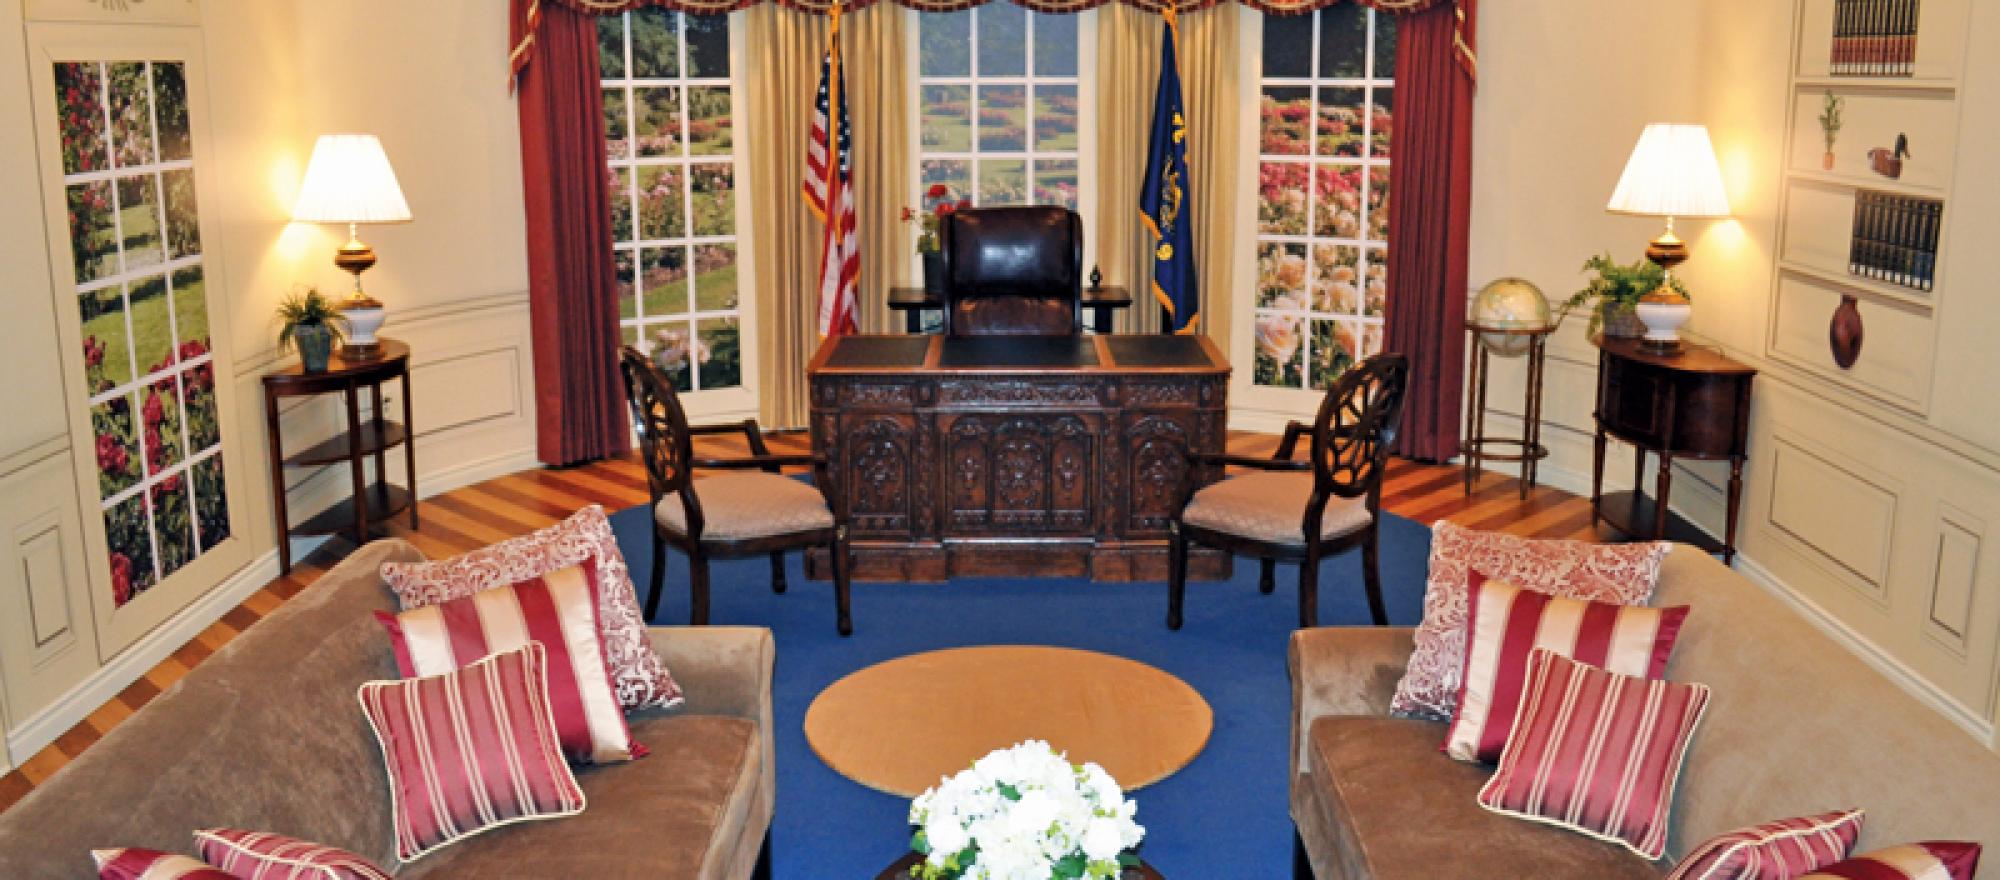 Oregon’s Oval Office